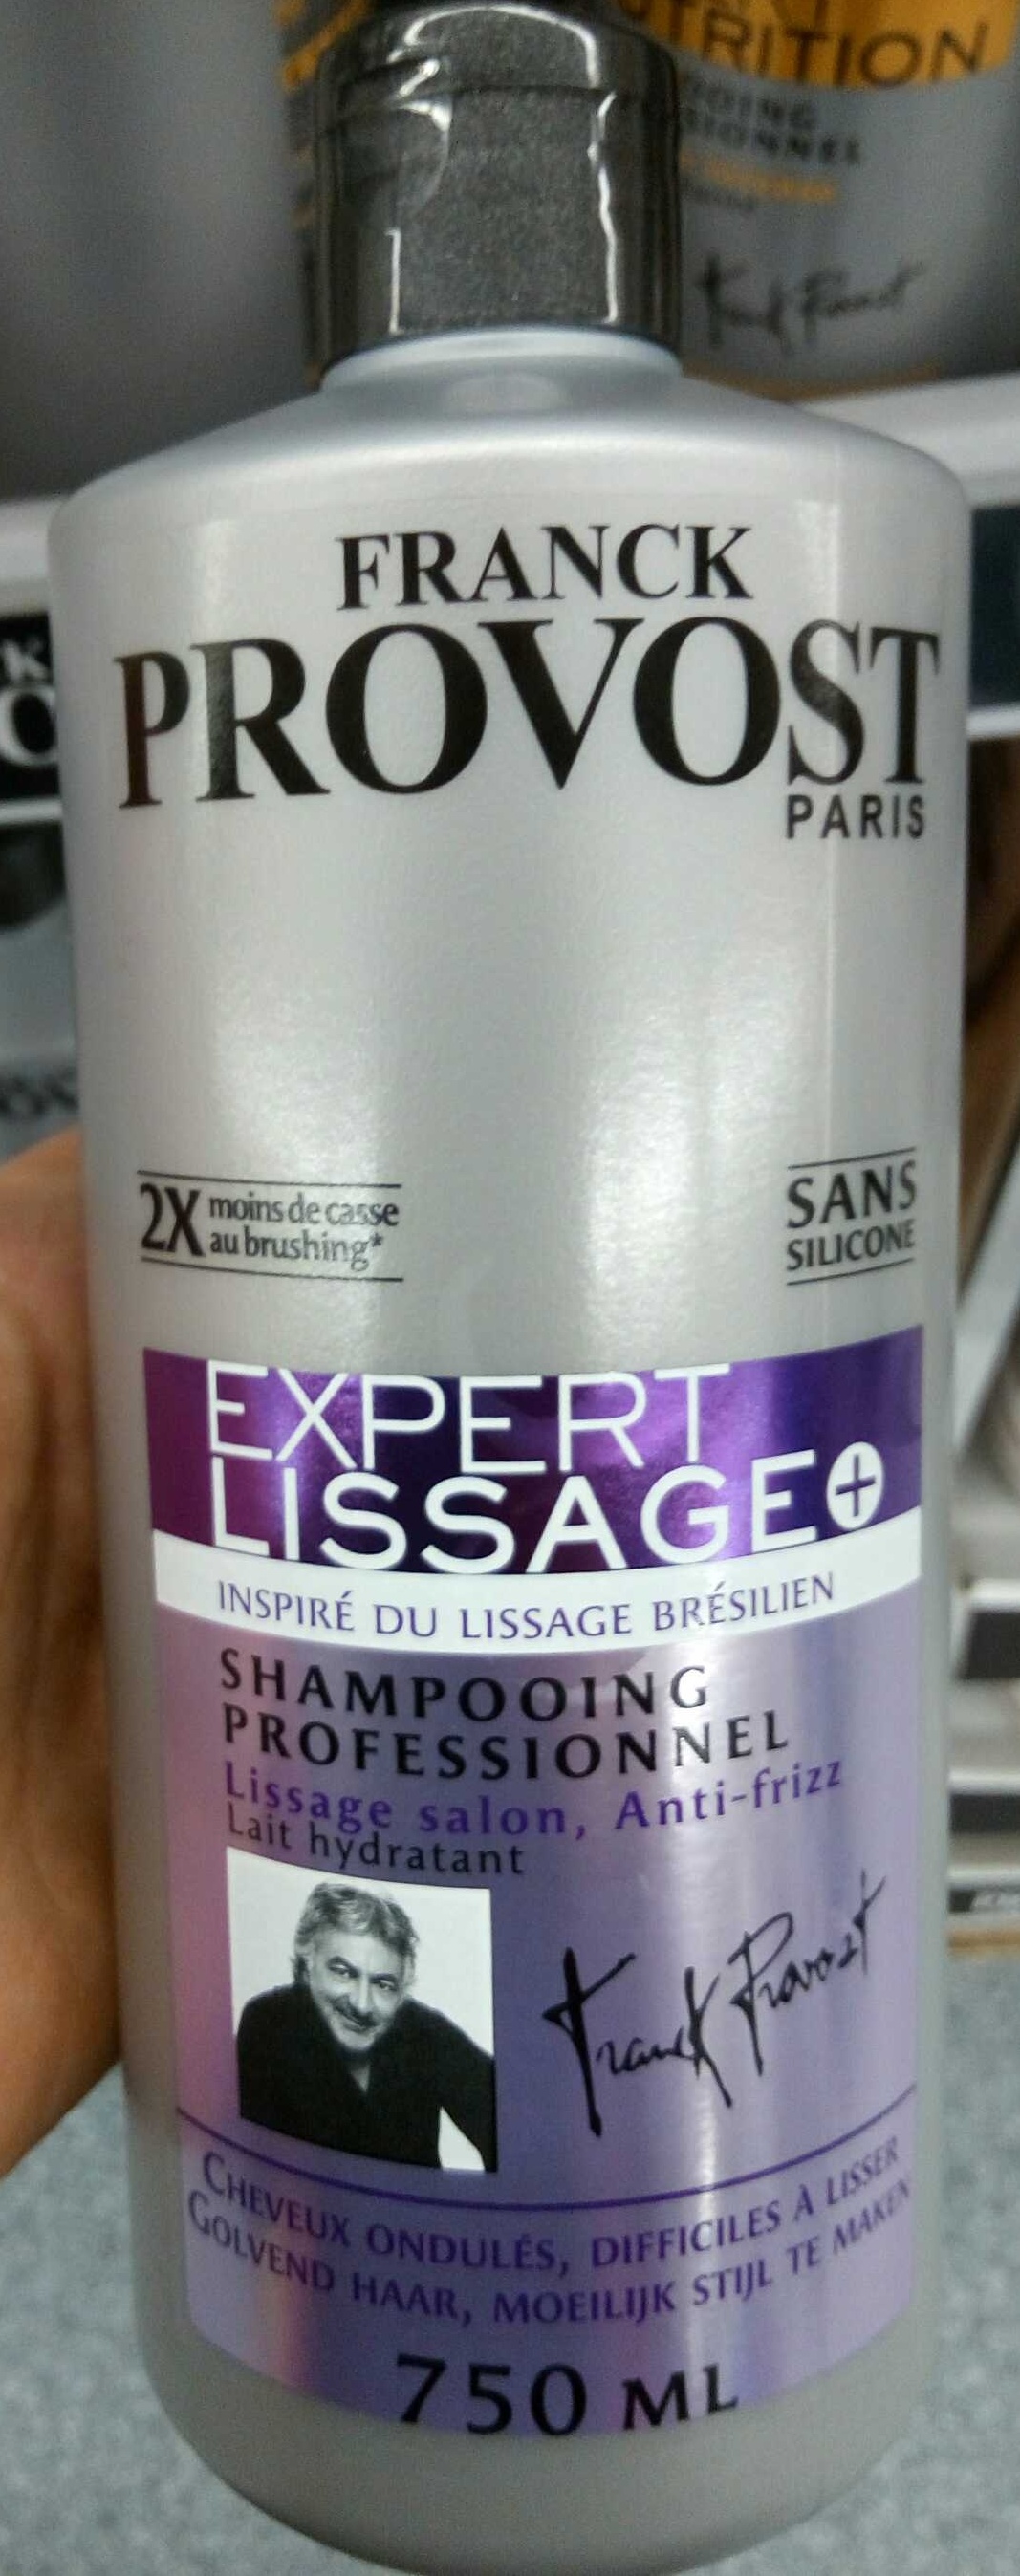 Expert lissage+ shampooing professionnel - Produkt - fr